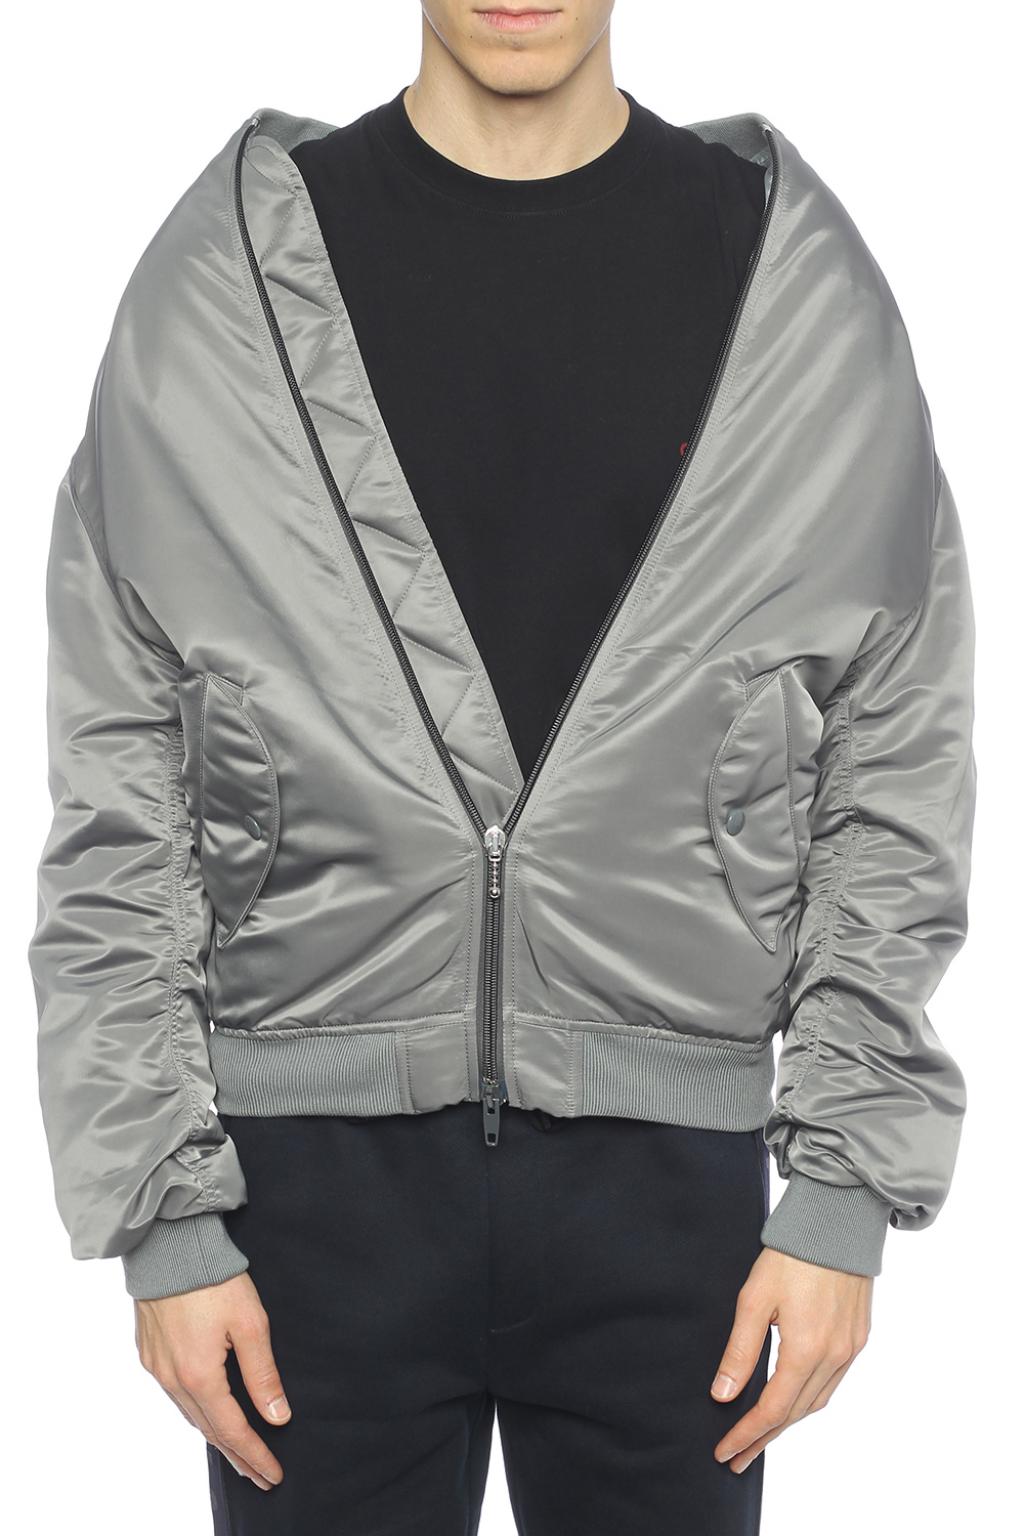 Chia sẻ hơn 69 balenciaga silver jacket siêu hot  trieuson5